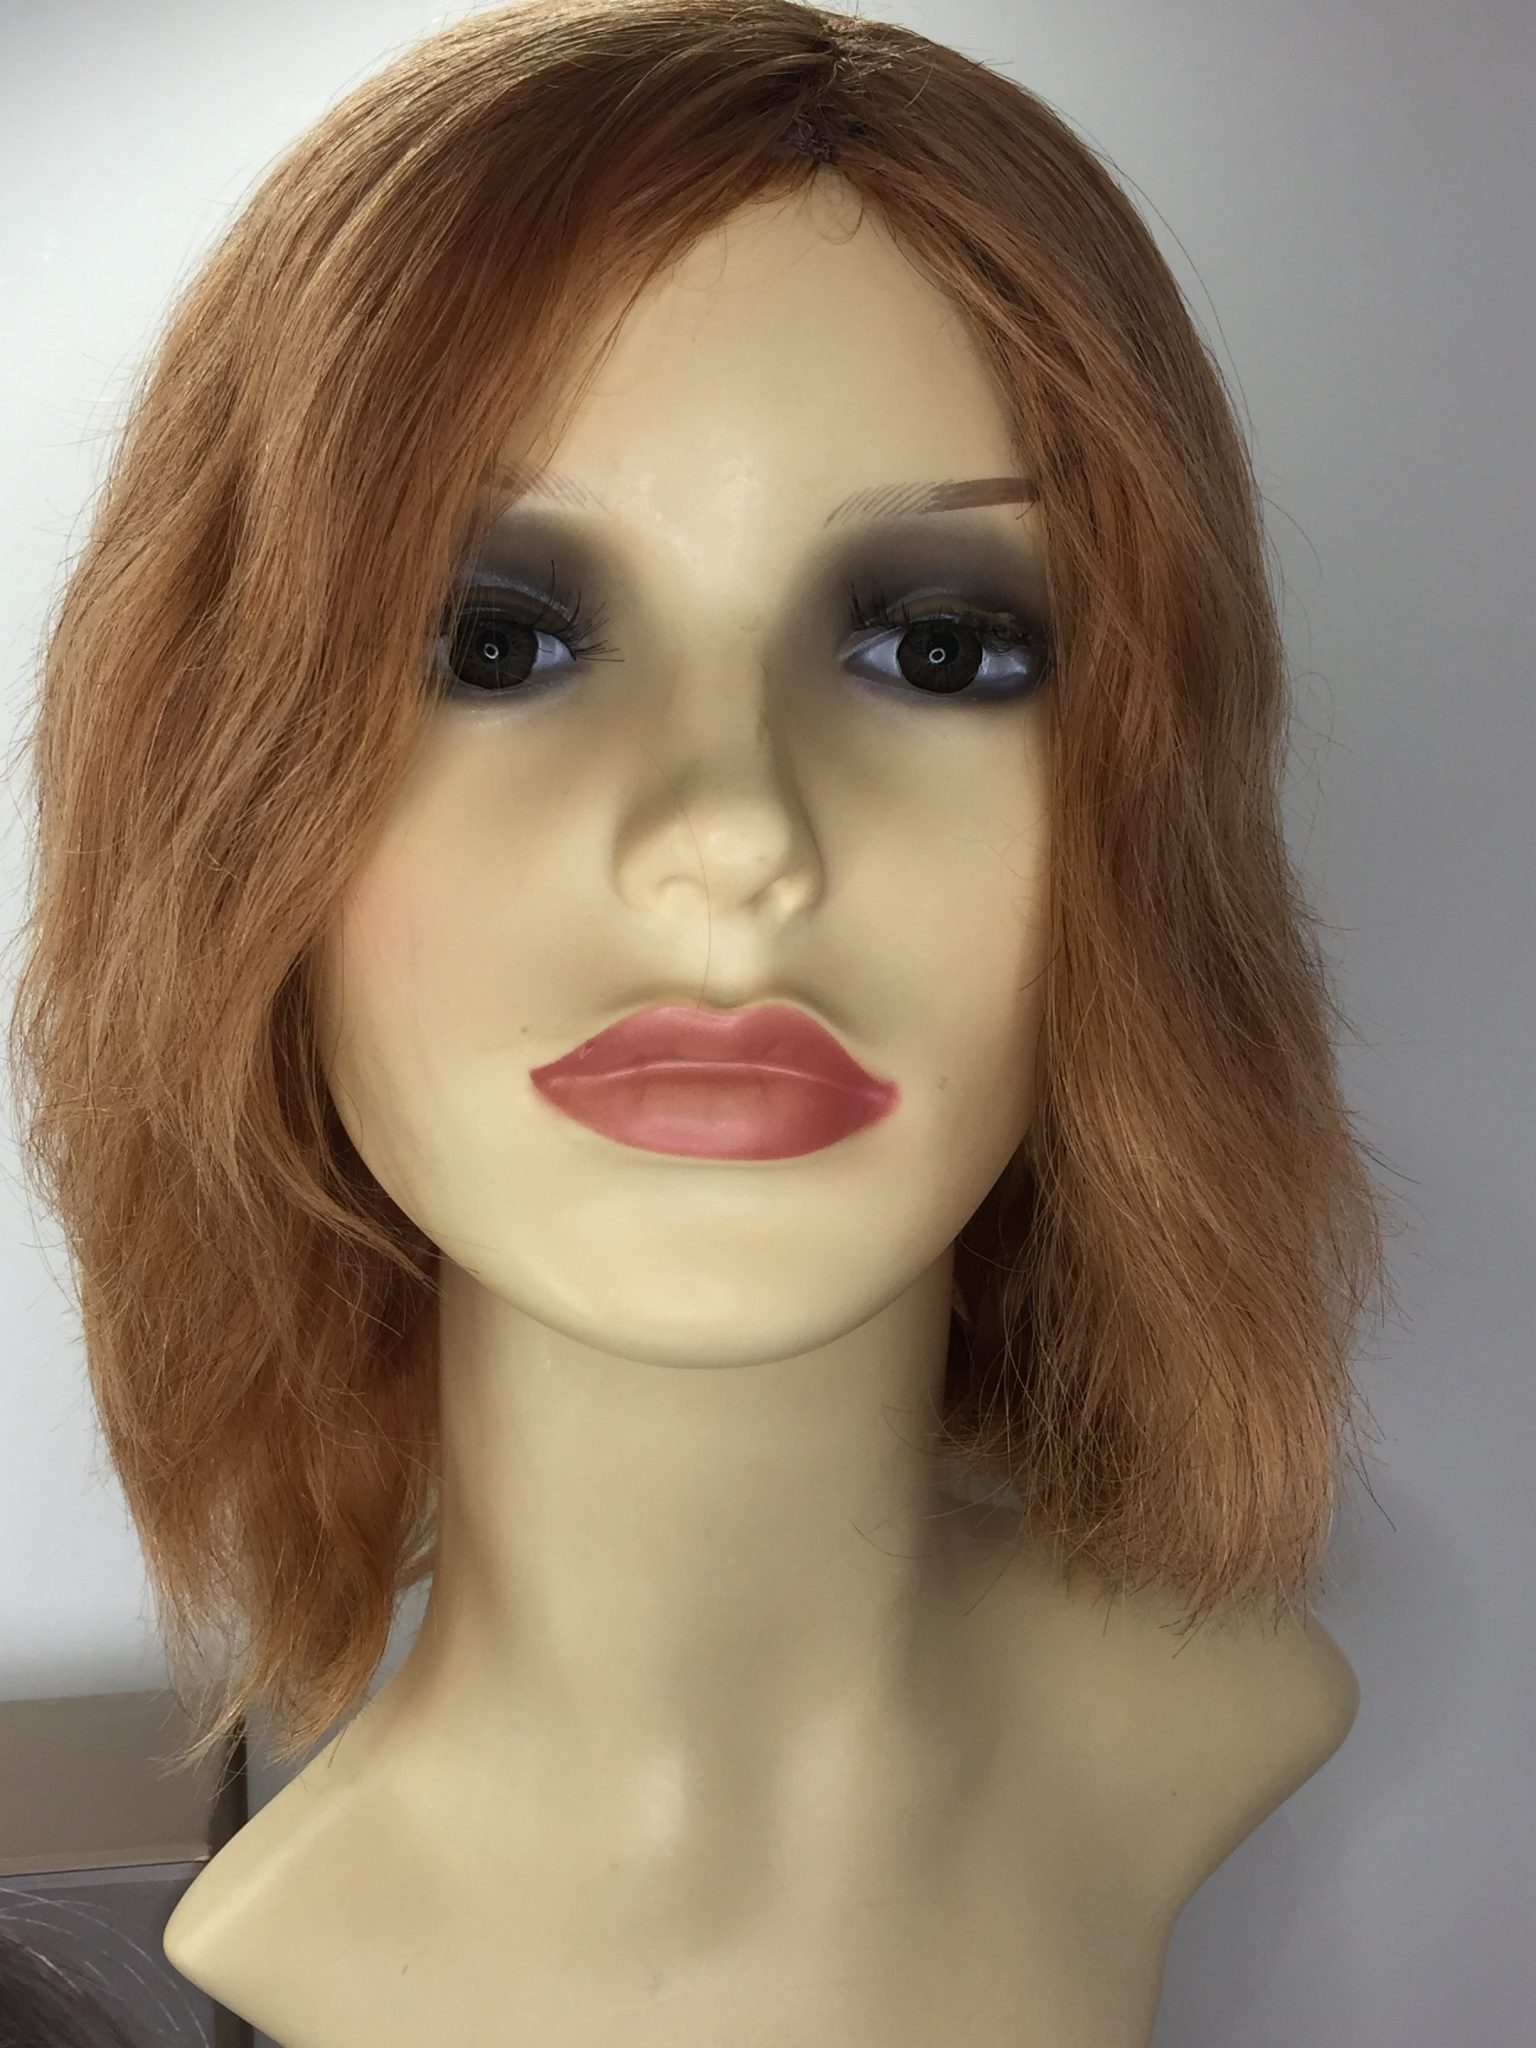 Human ginger hair. Bplrlw36 – Wigbank